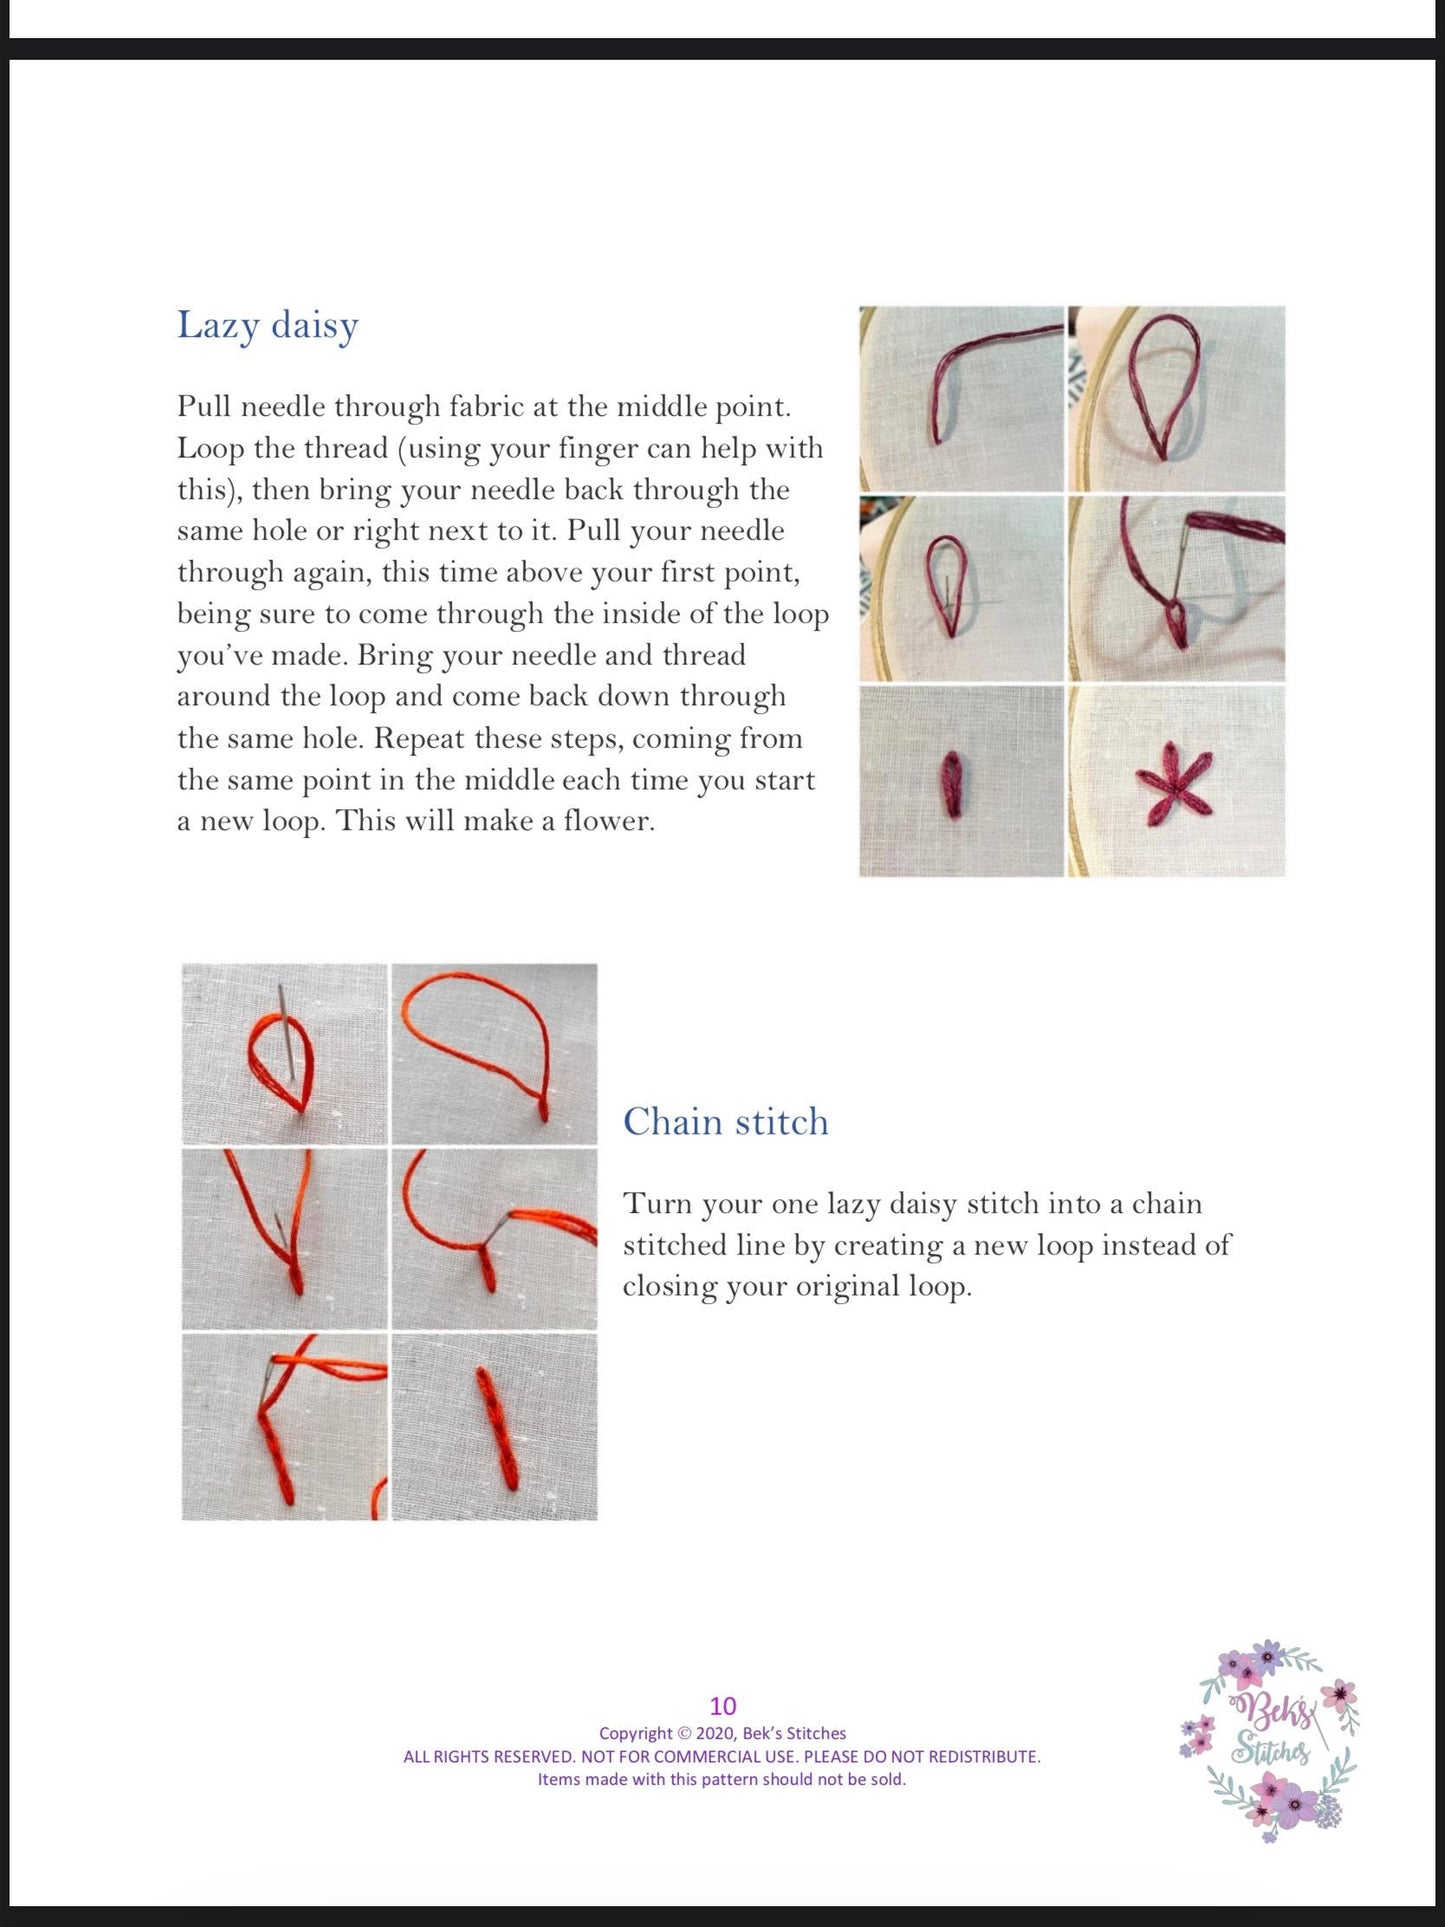 PDF Pattern - Christmas Star, Intermediate Embroidery Pattern